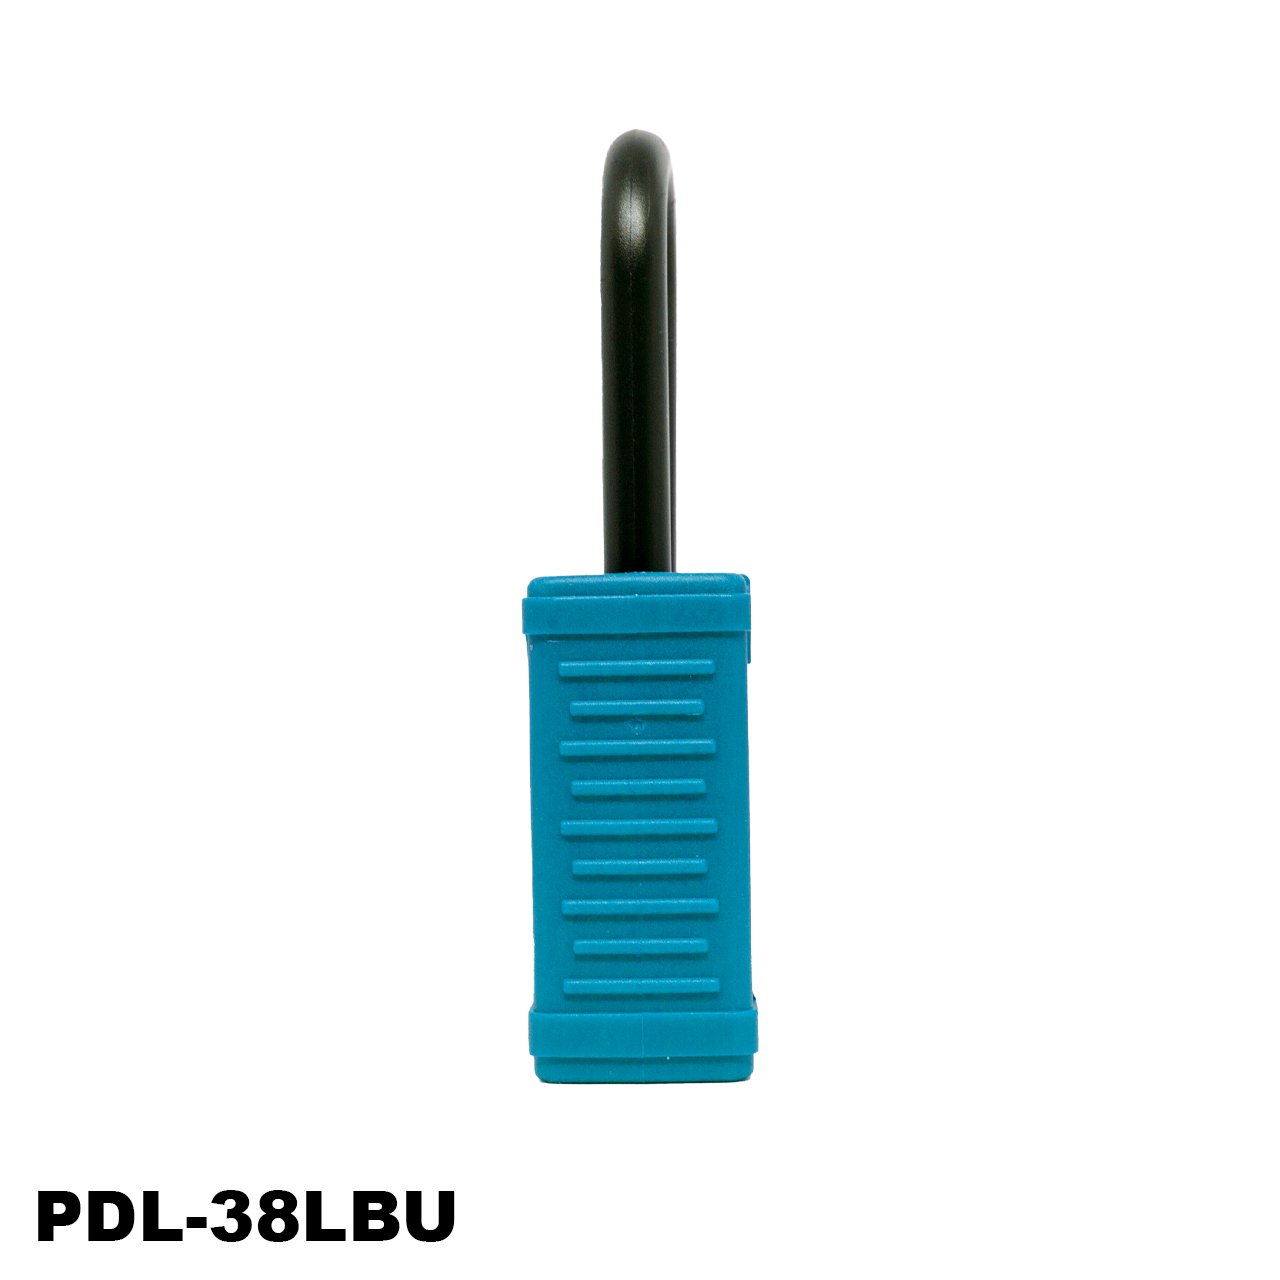 Candado de seguridad aislado, color azul claro, LM.PDL-38LBU006